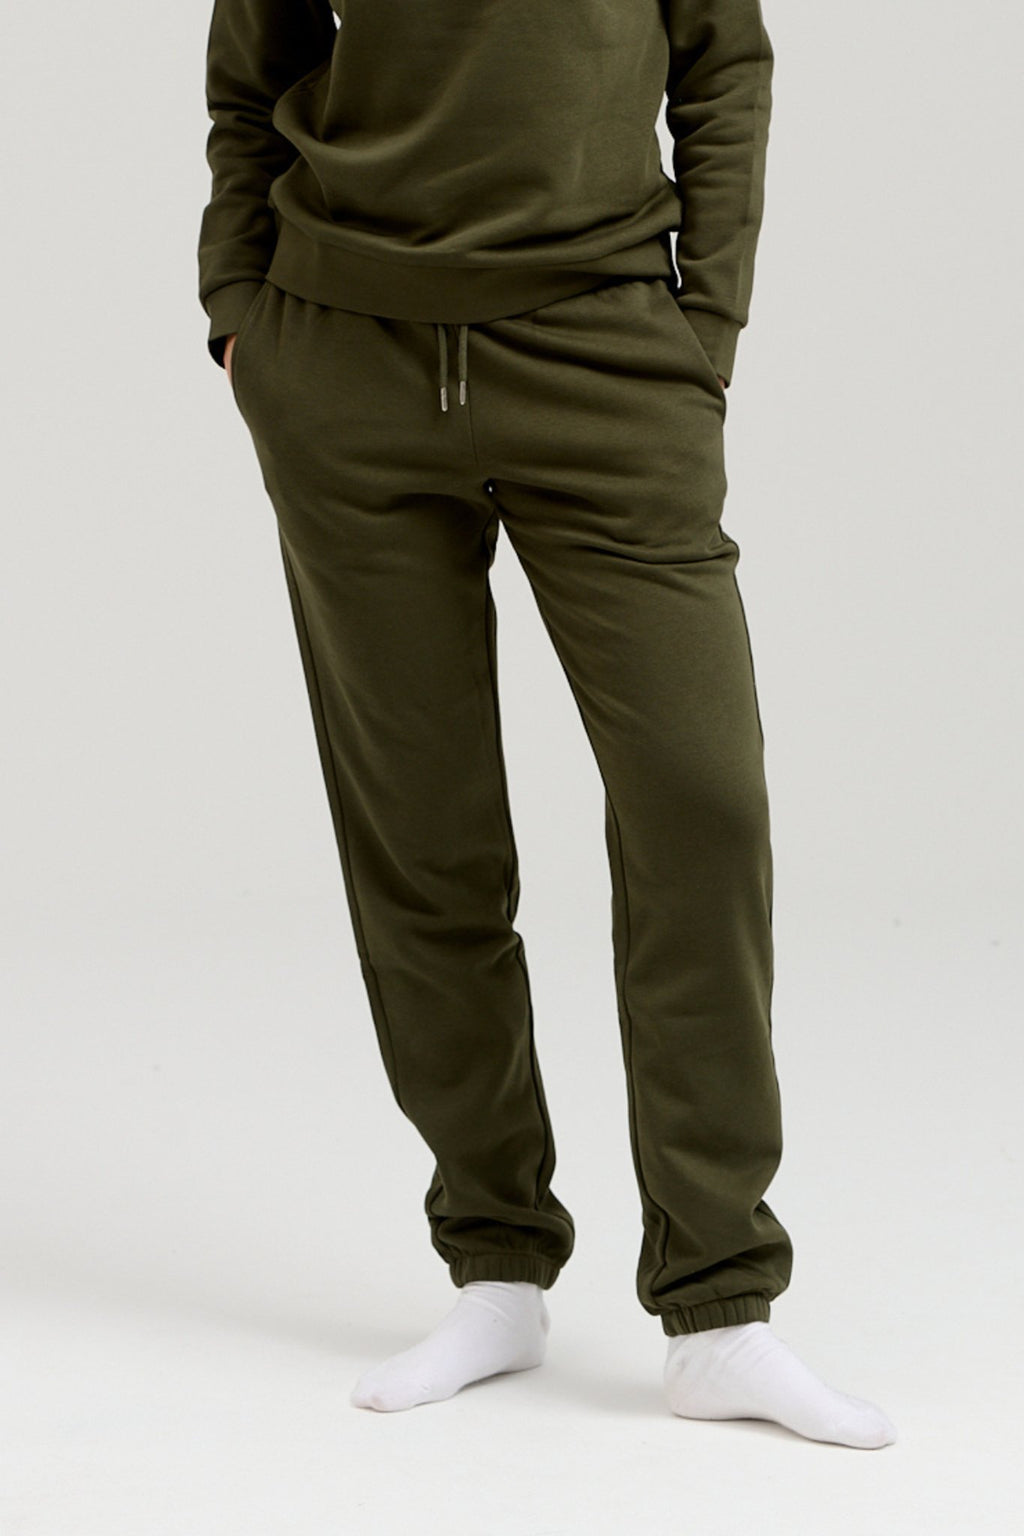 Basic Sweatsuit with Crewneck (Dark Green) - Package Deal (Women)